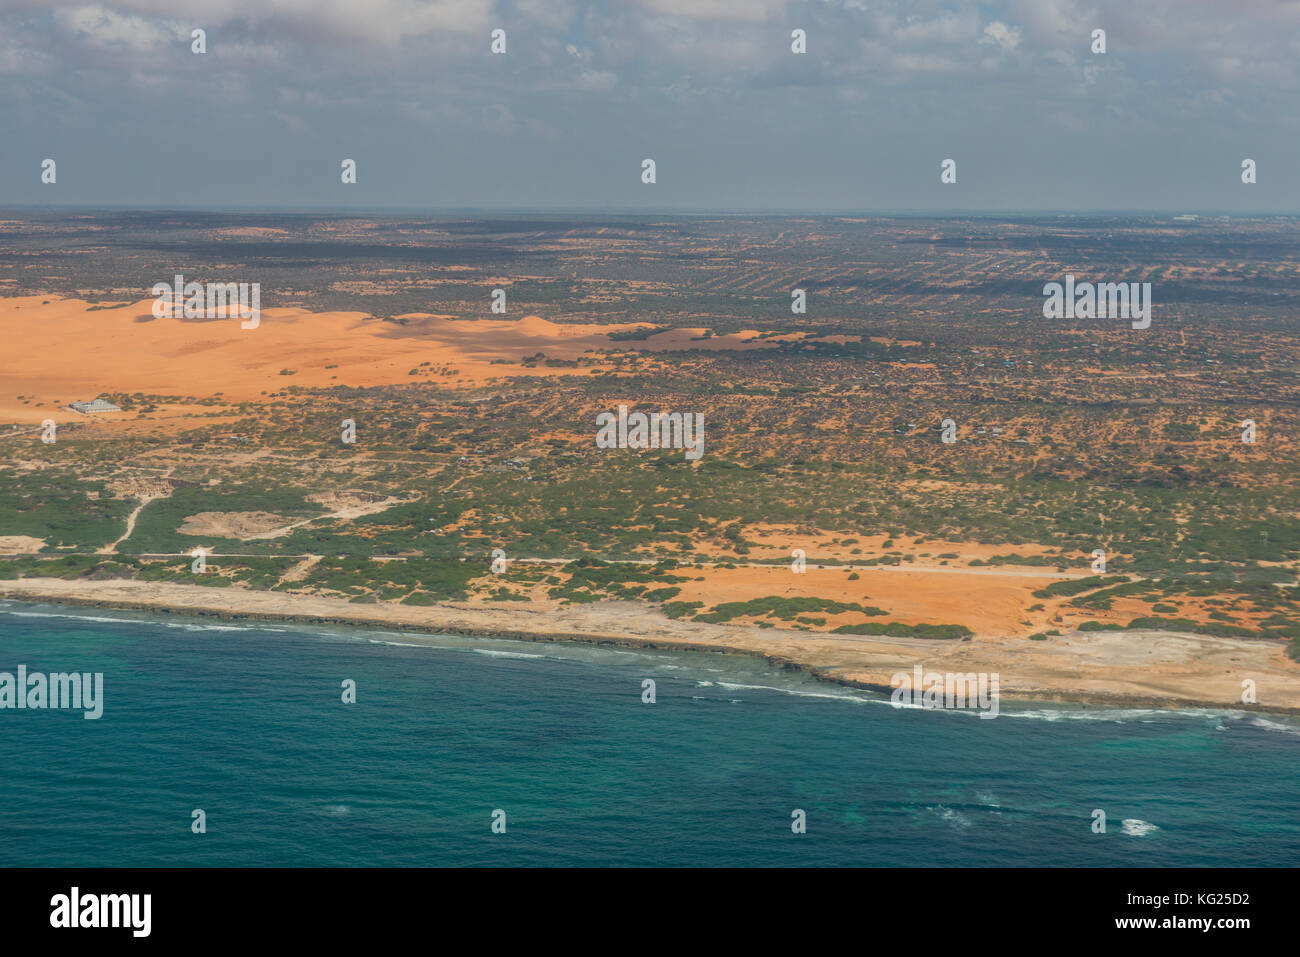 Coastline of Somalia, Africa Stock Photo